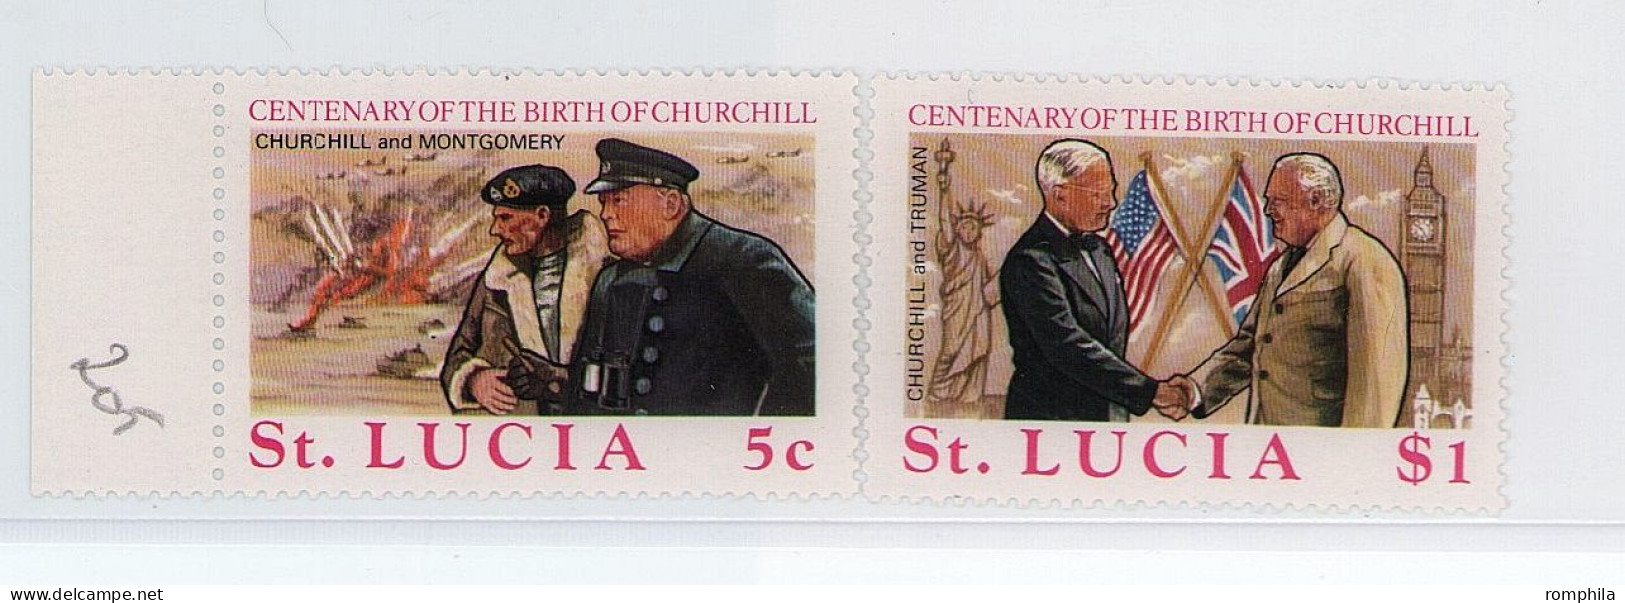 St. Lucia 1974 Sir Winston Churchill MNH Stamps - Sir Winston Churchill